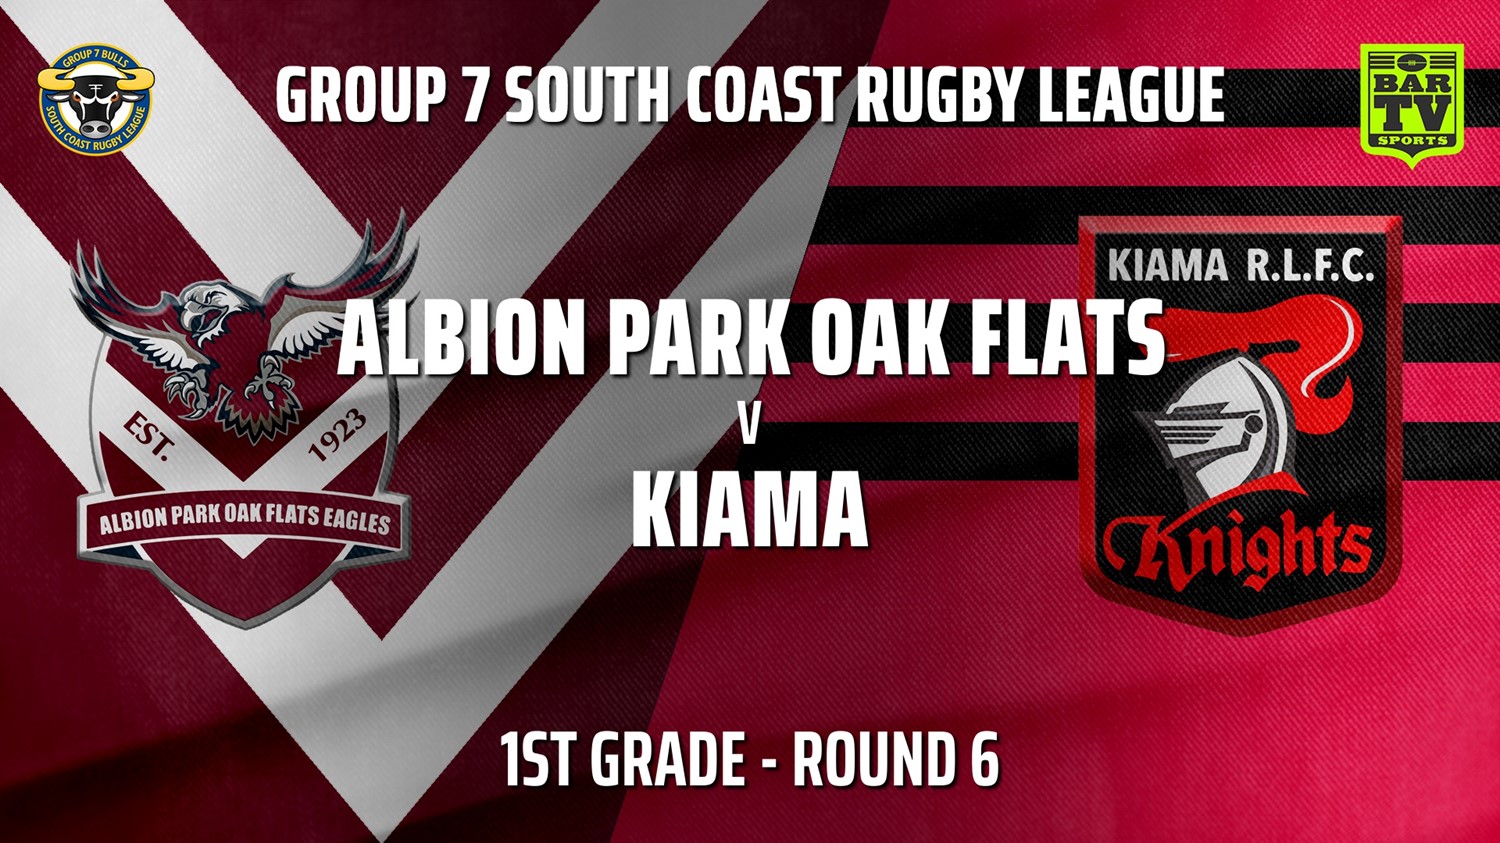 210523-Group 7 RL Round 6 - 1st Grade - Albion Park Oak Flats v Kiama Knights Slate Image